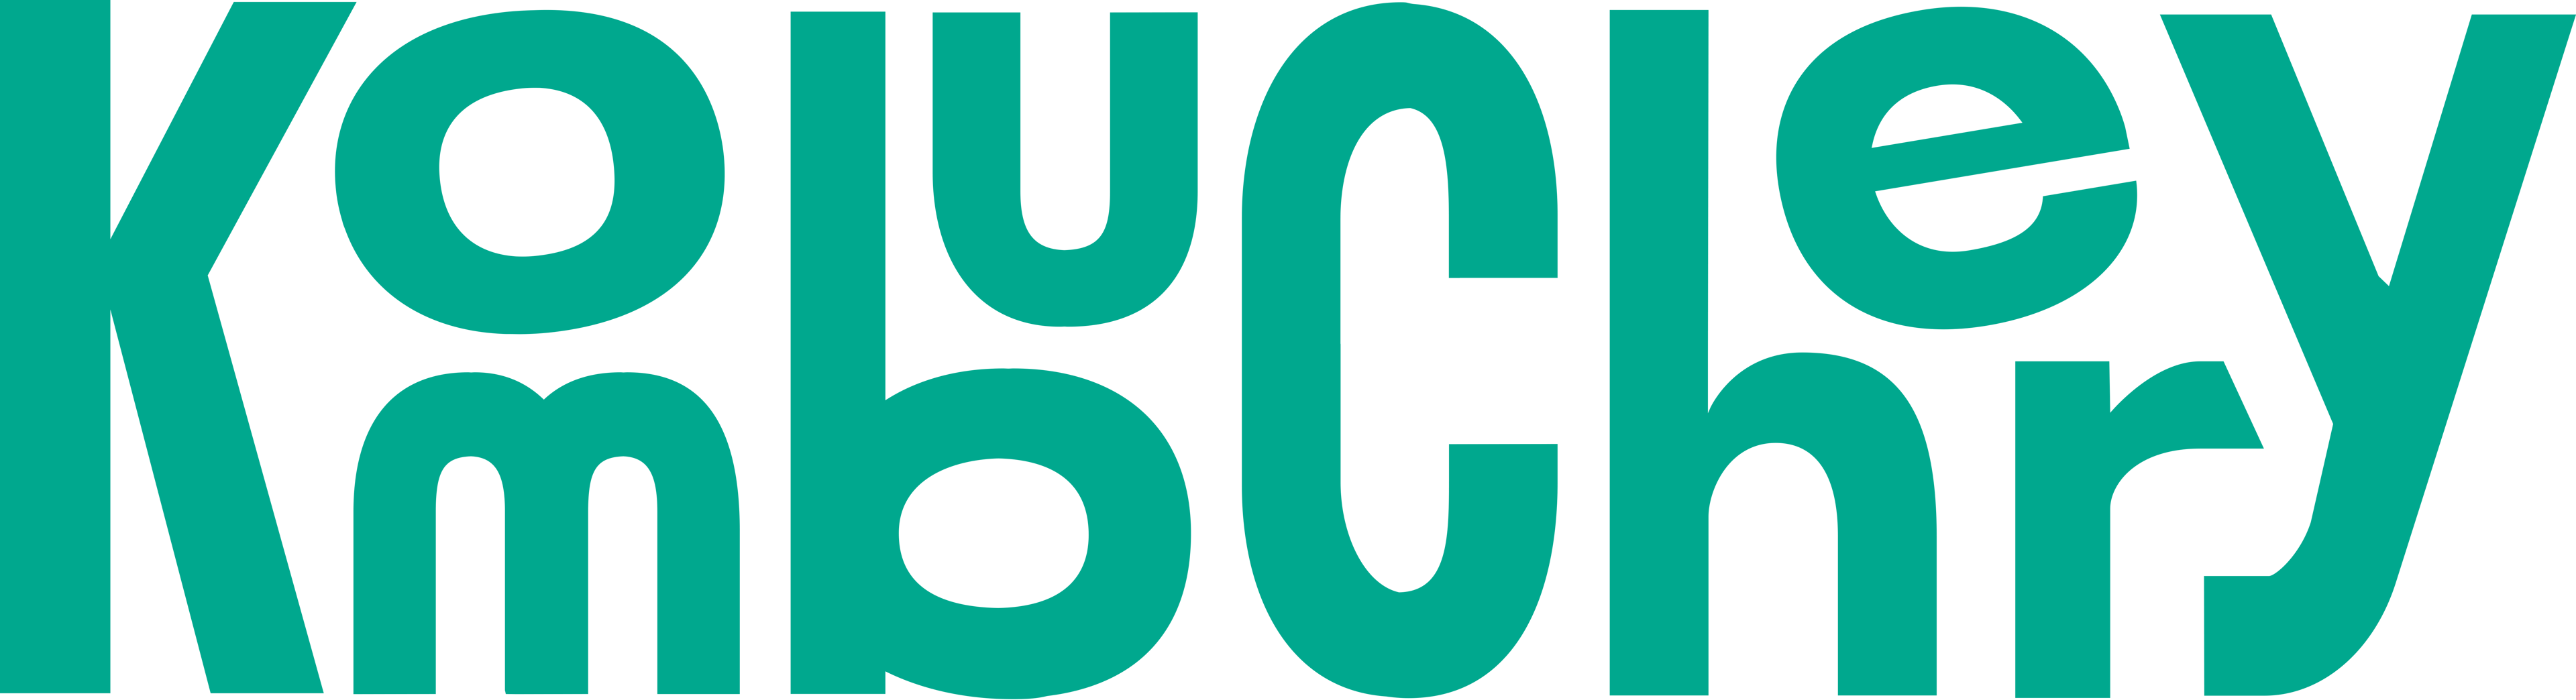 Kombuchery logo